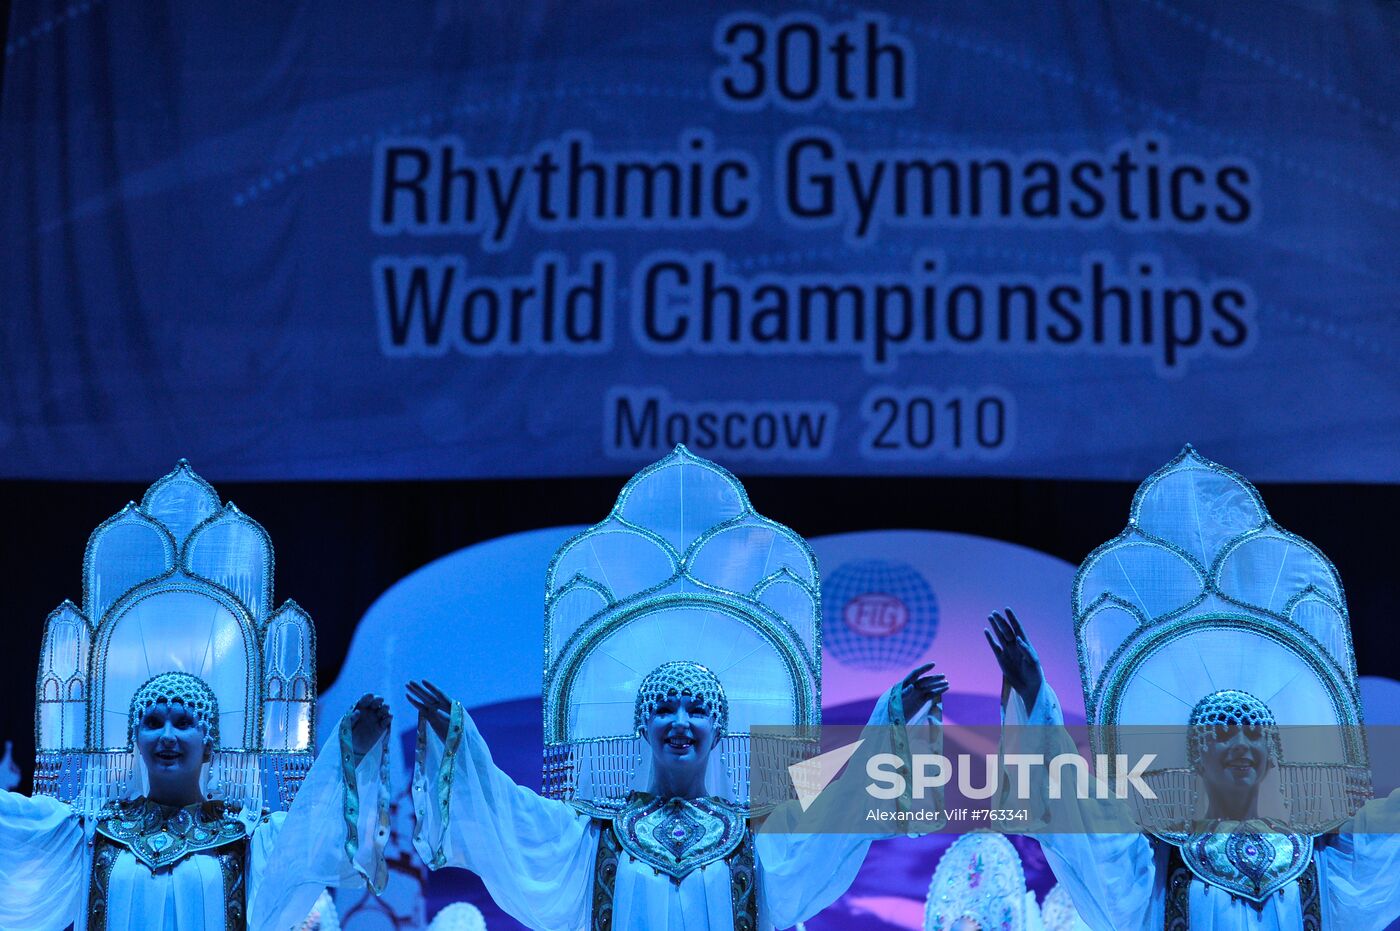 Opening of Rhythmic Gymnastics World Championship